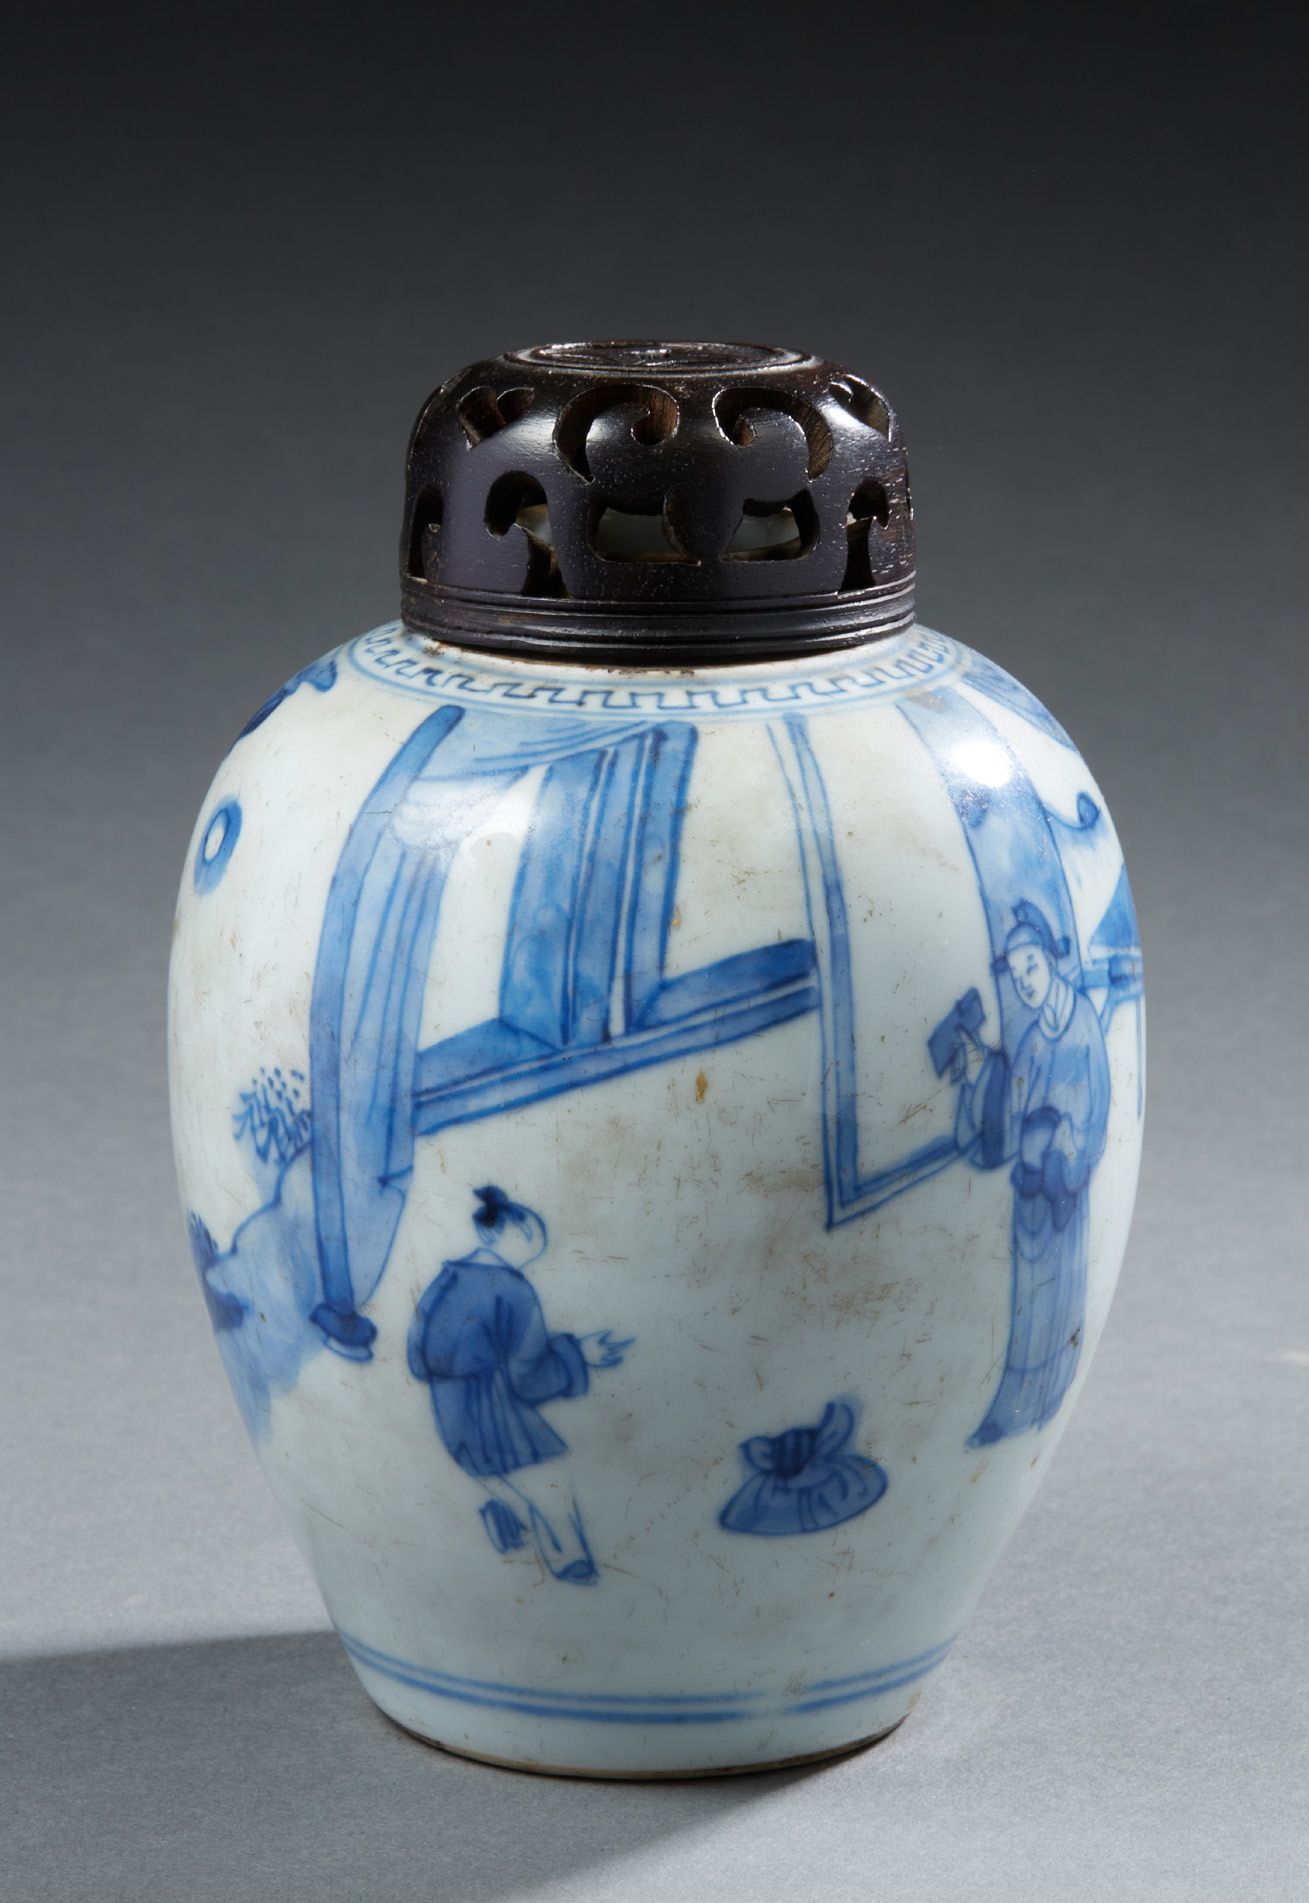 CHINE 釉下青花小卵形瓷瓶，饰以亭台楼阁上的书生和他的仆人。镂空木制后盖
康熙早期，1662 - 1722
高：14.5厘米